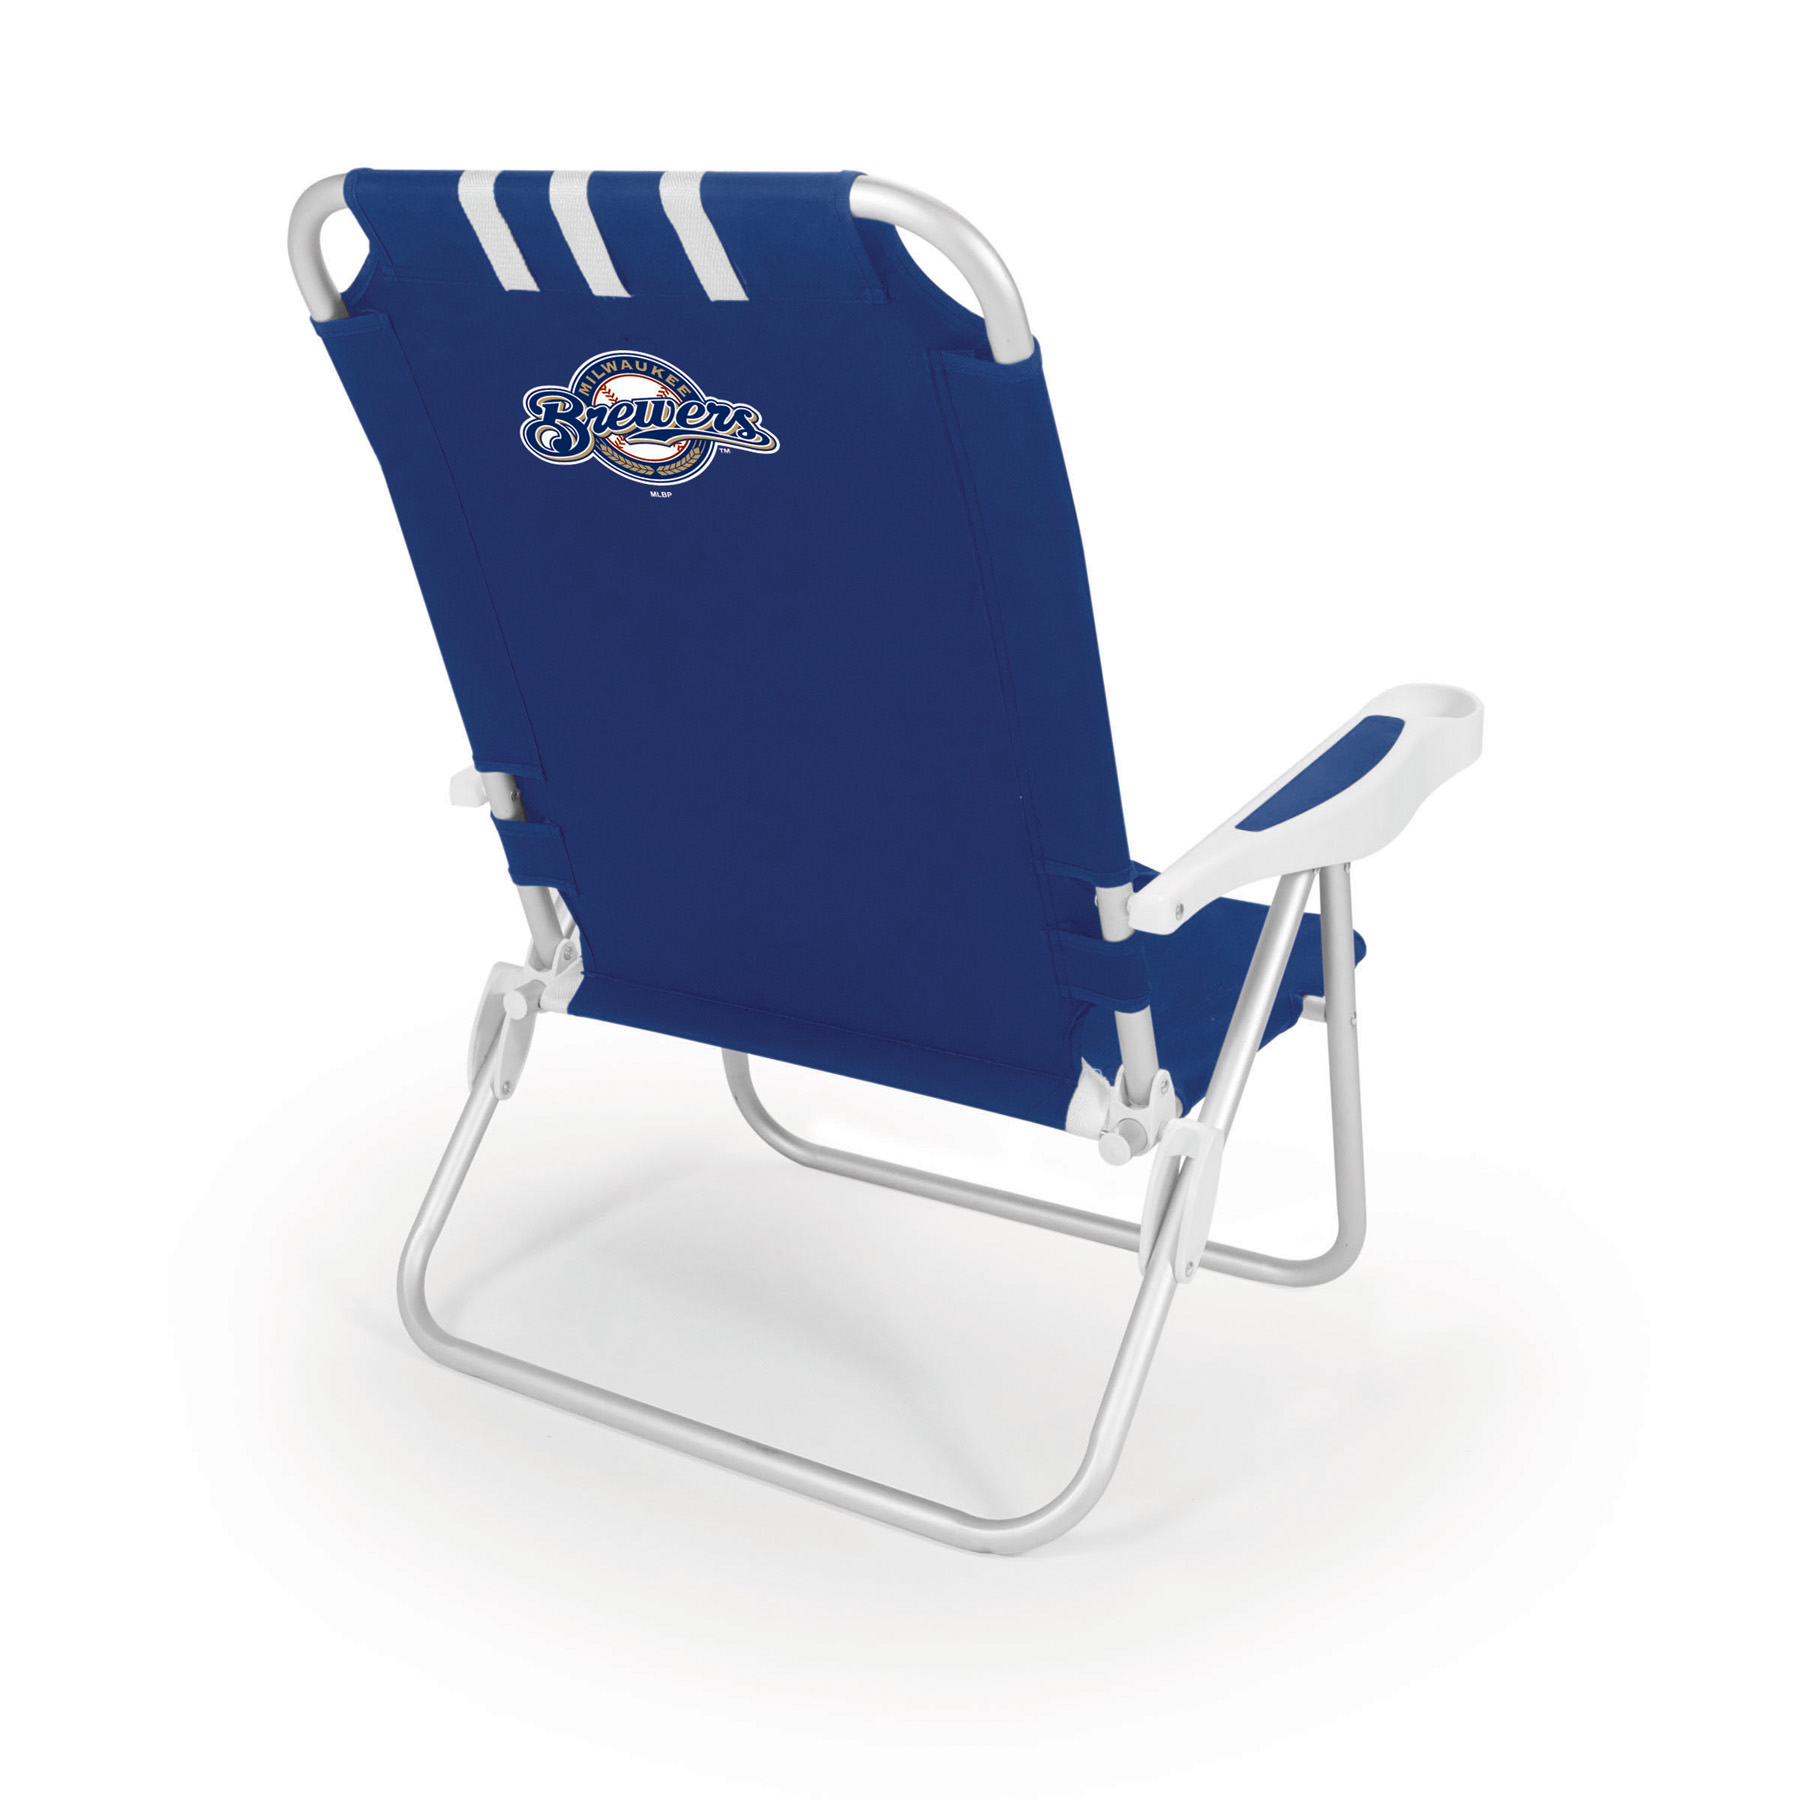 Picnic Time Monaco Beach Chair - MLB - Navy